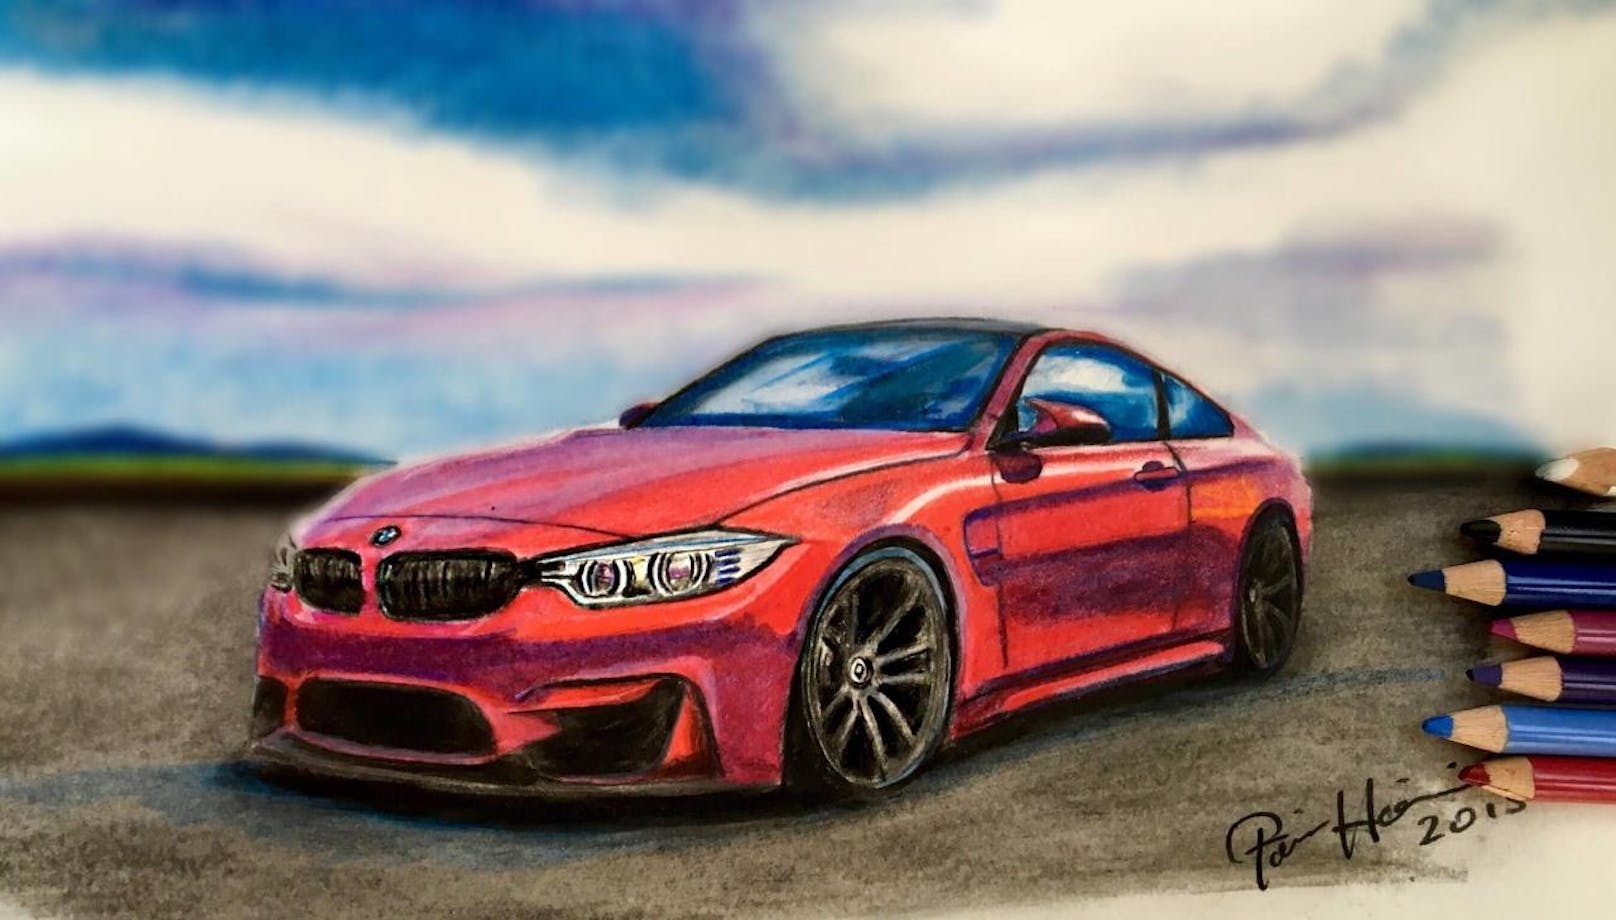 "BMW m4" by Fidan H.